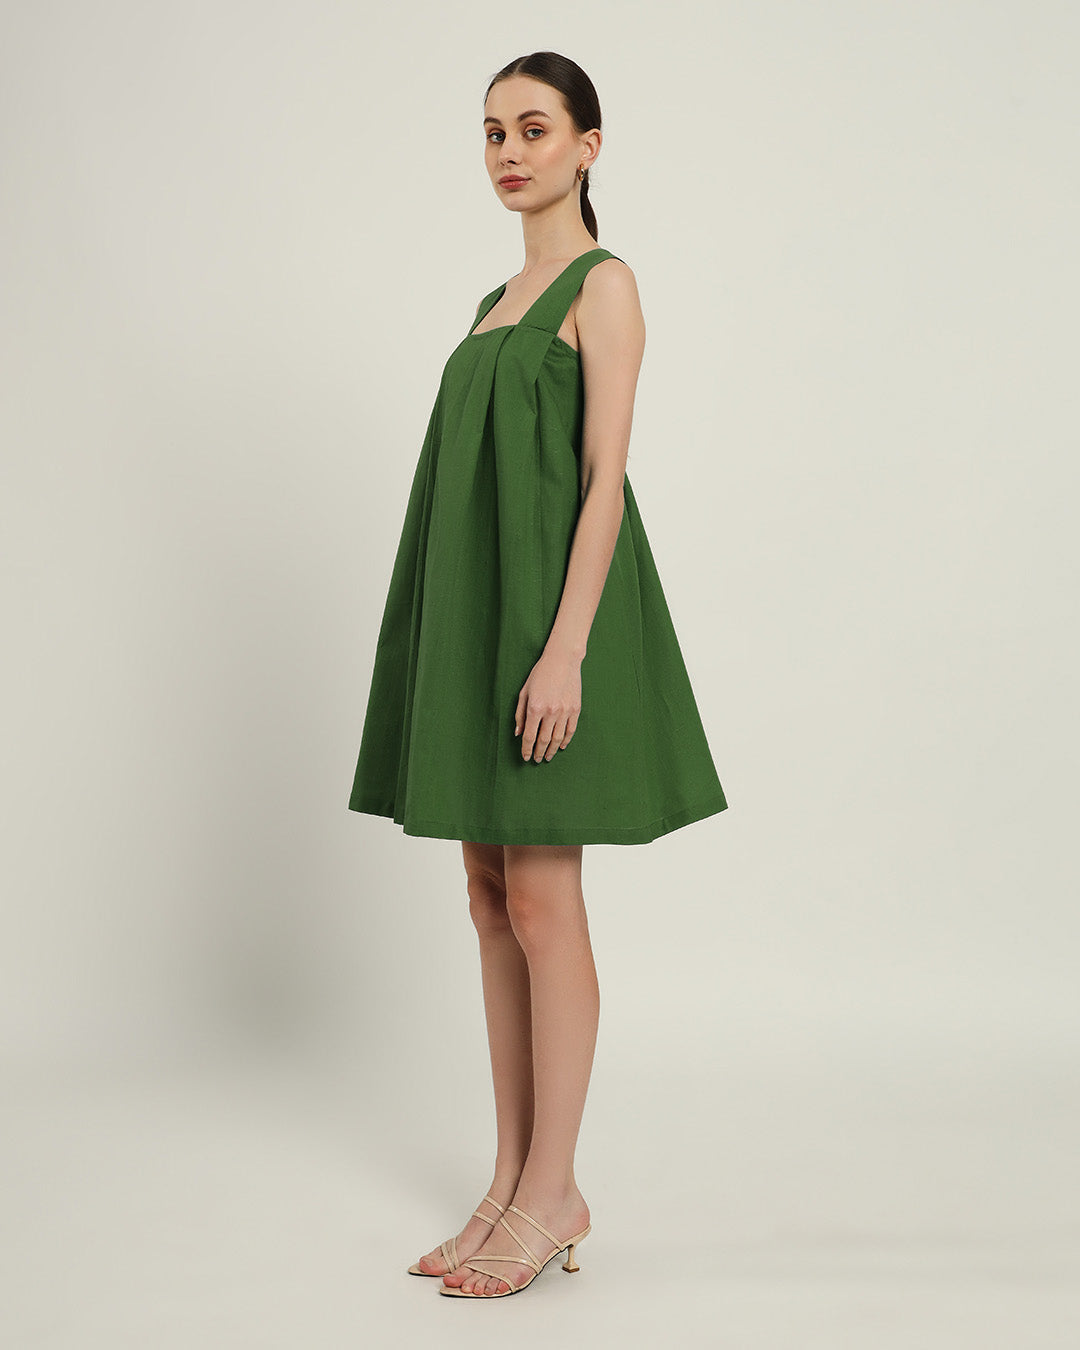 The Larissa Emerald Cotton Dress